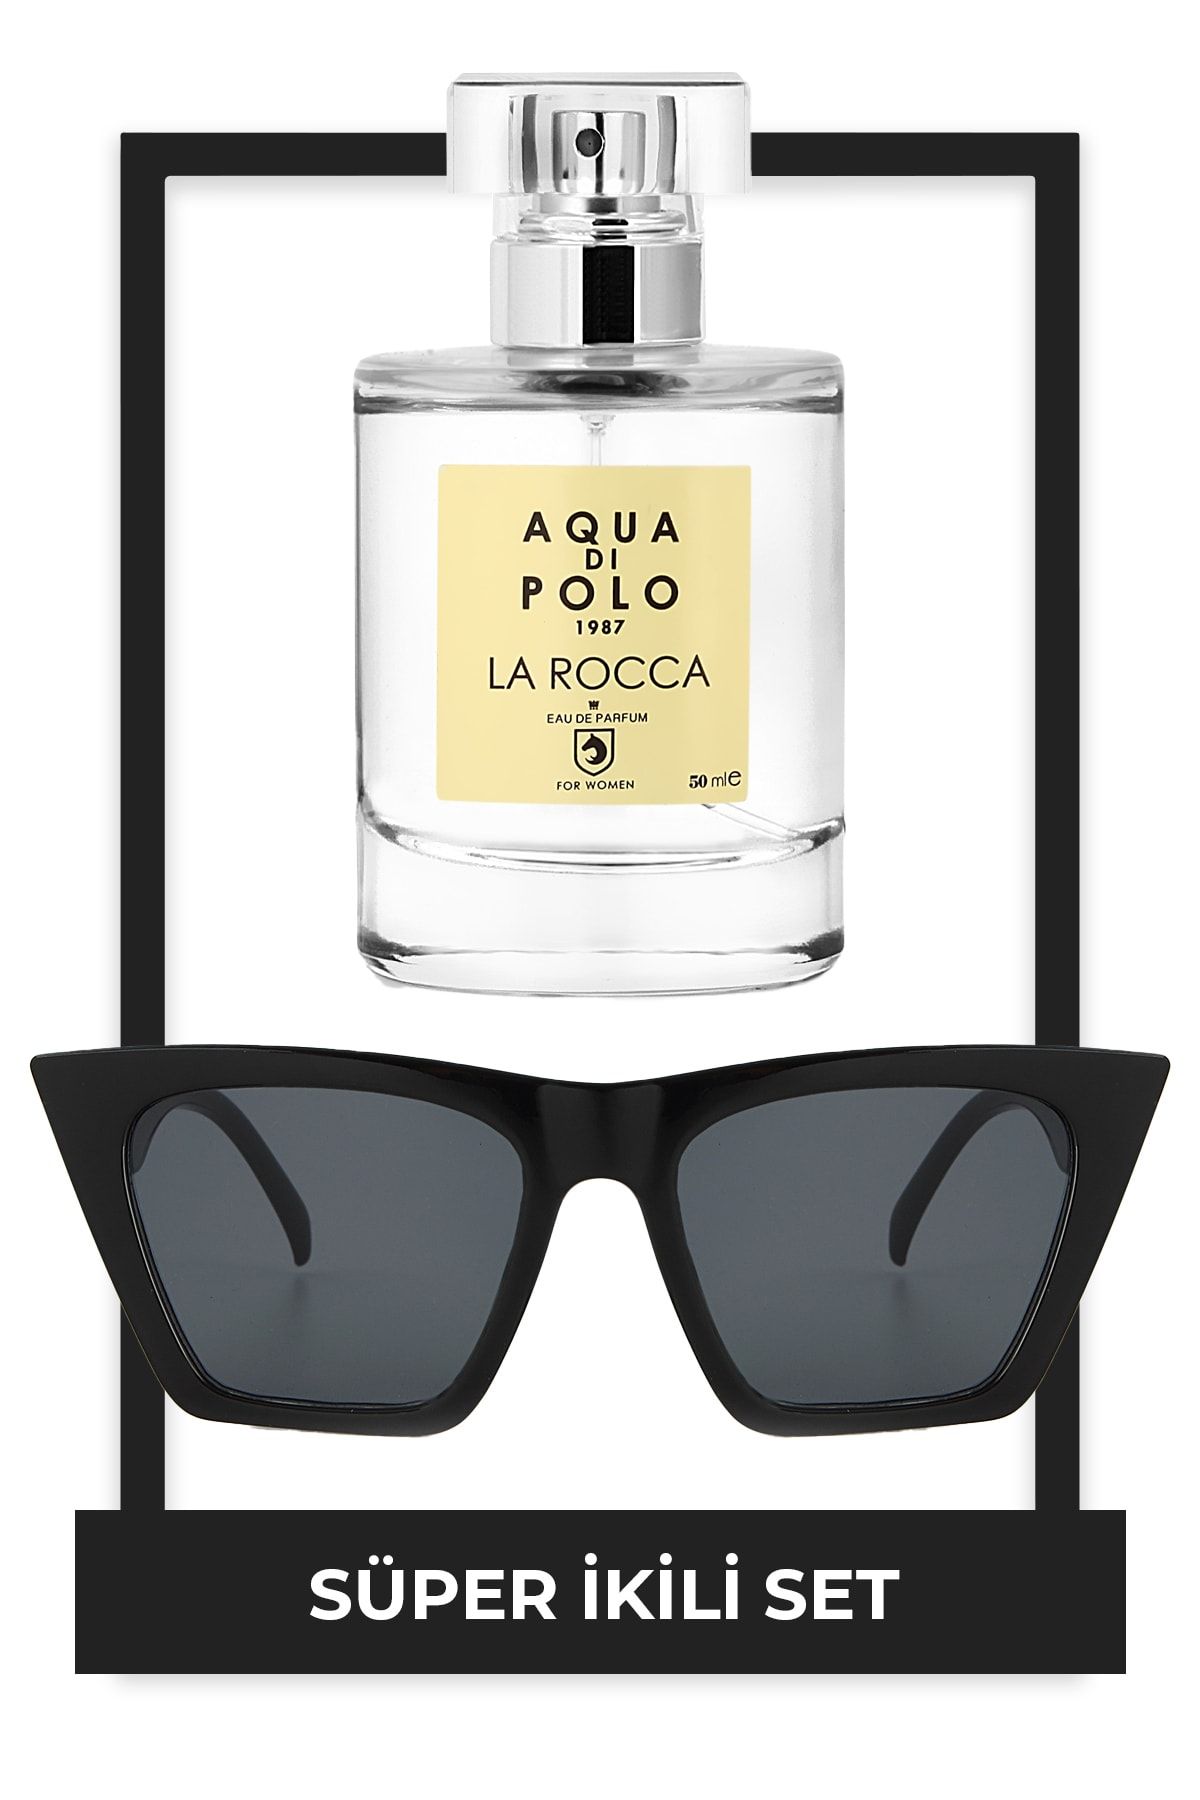 Aqua Di Polo 1987 2'li Fırsat Paketi Güneş Gözlüğü + La Rocca Edp 50 ml Kadın Parfüm Stcc002901